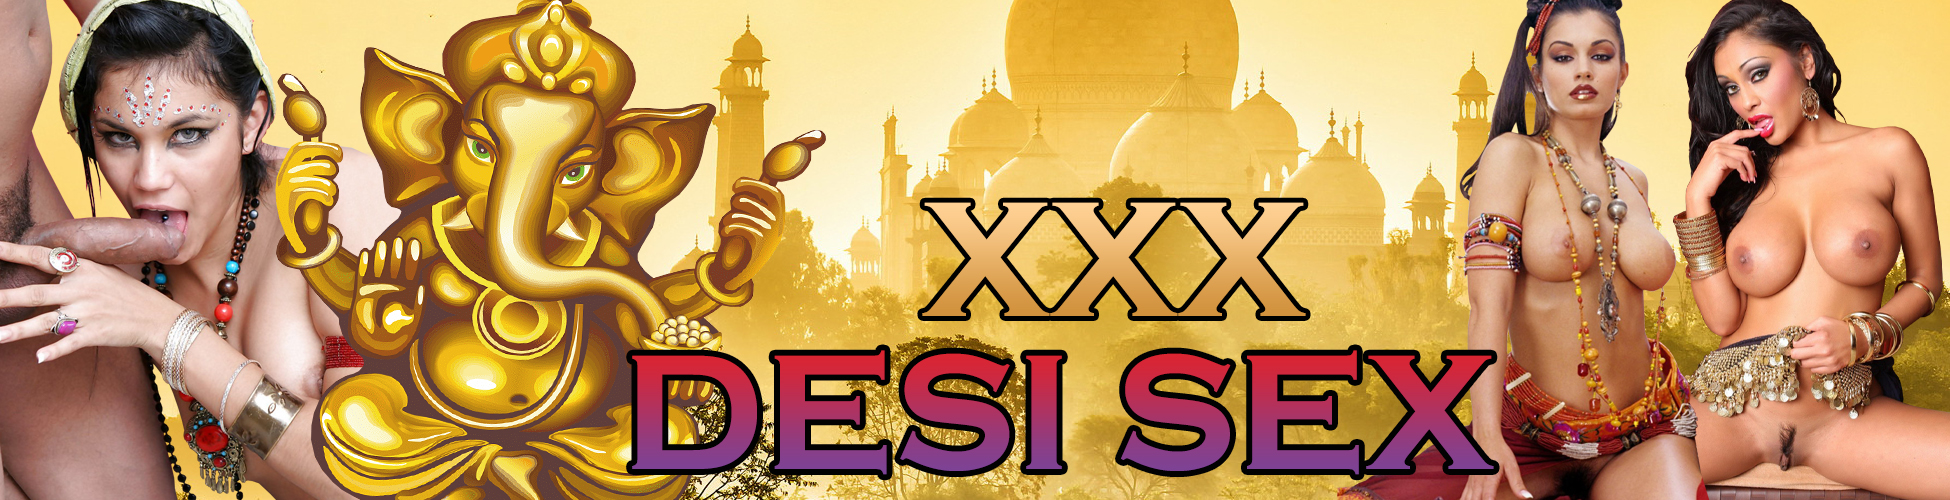 Xxx Desi Sex Full Hd - XXX Desi Sex â¤ï¸ï¸ Hot HD Hindi Porn